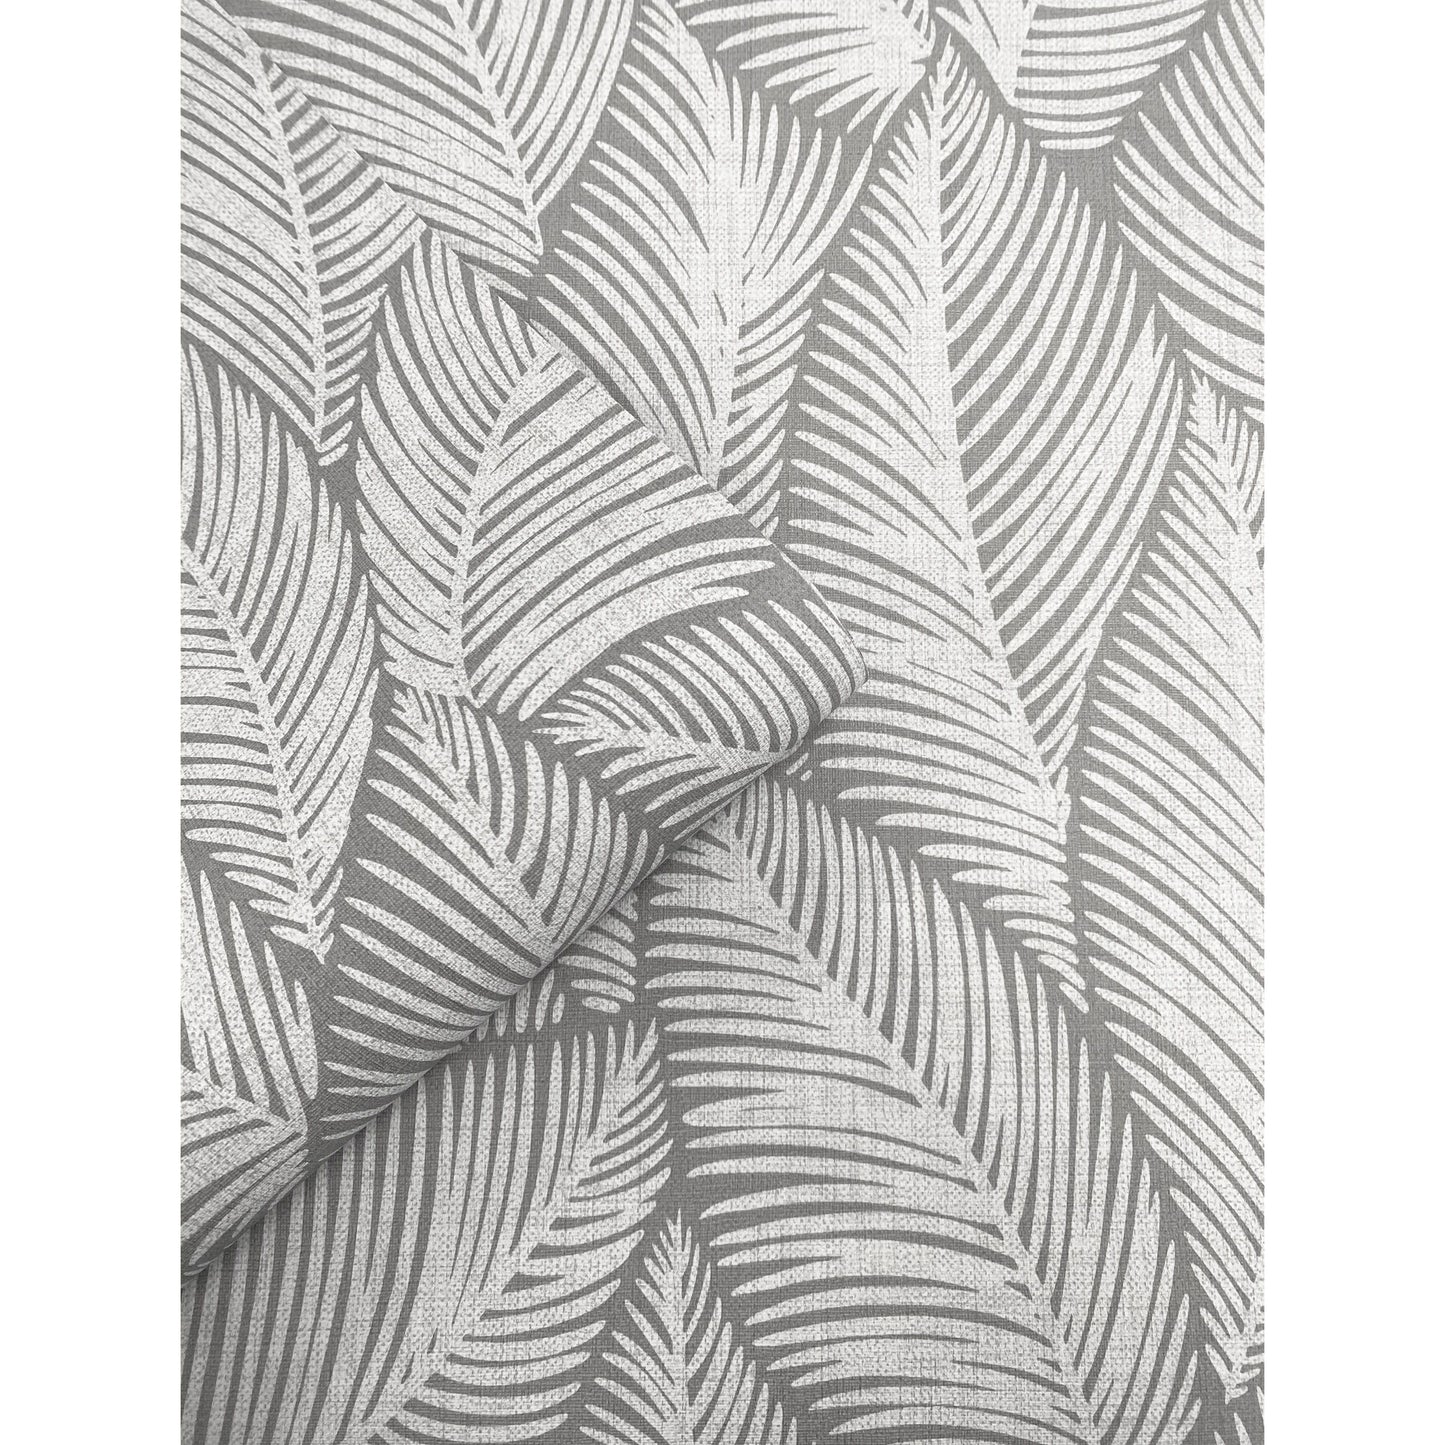 Muriva Denver Leaf Grey Wallpaper (196311)